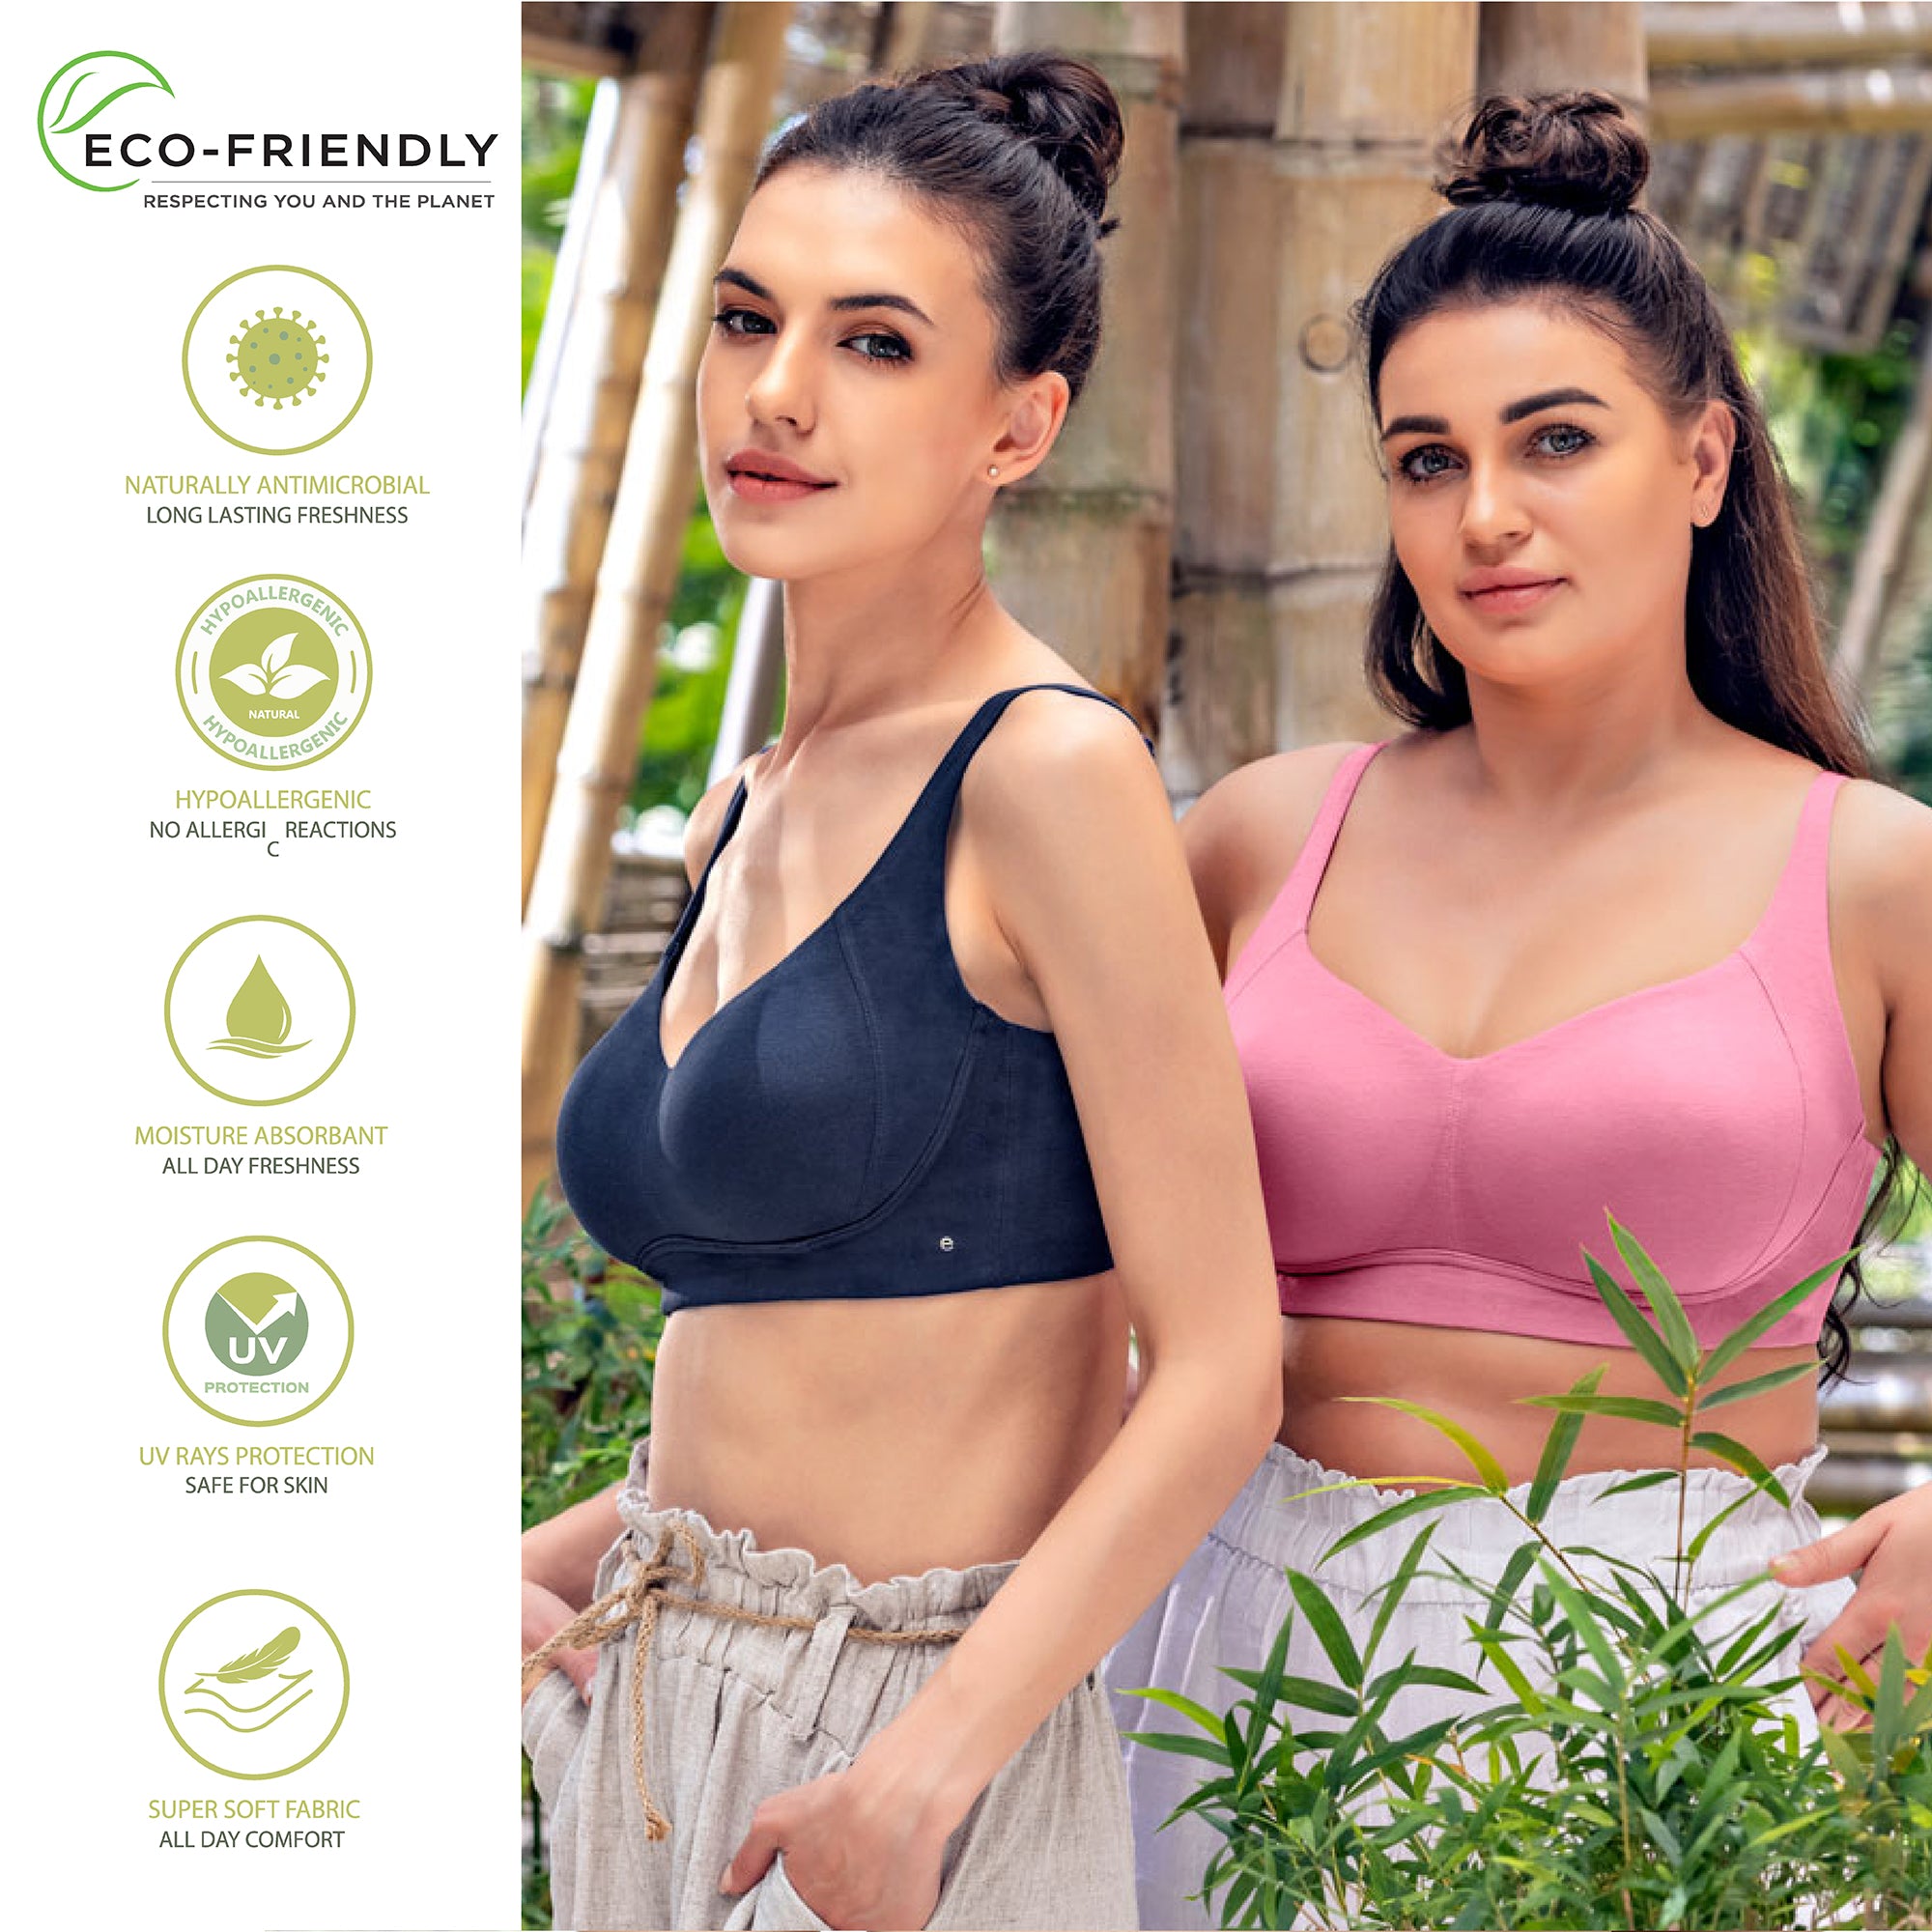 Enamor Innovative Bamboo Fabric Full Support Bra For Women | Eco-Friendly Bamboo Fabric For All Day Freshness